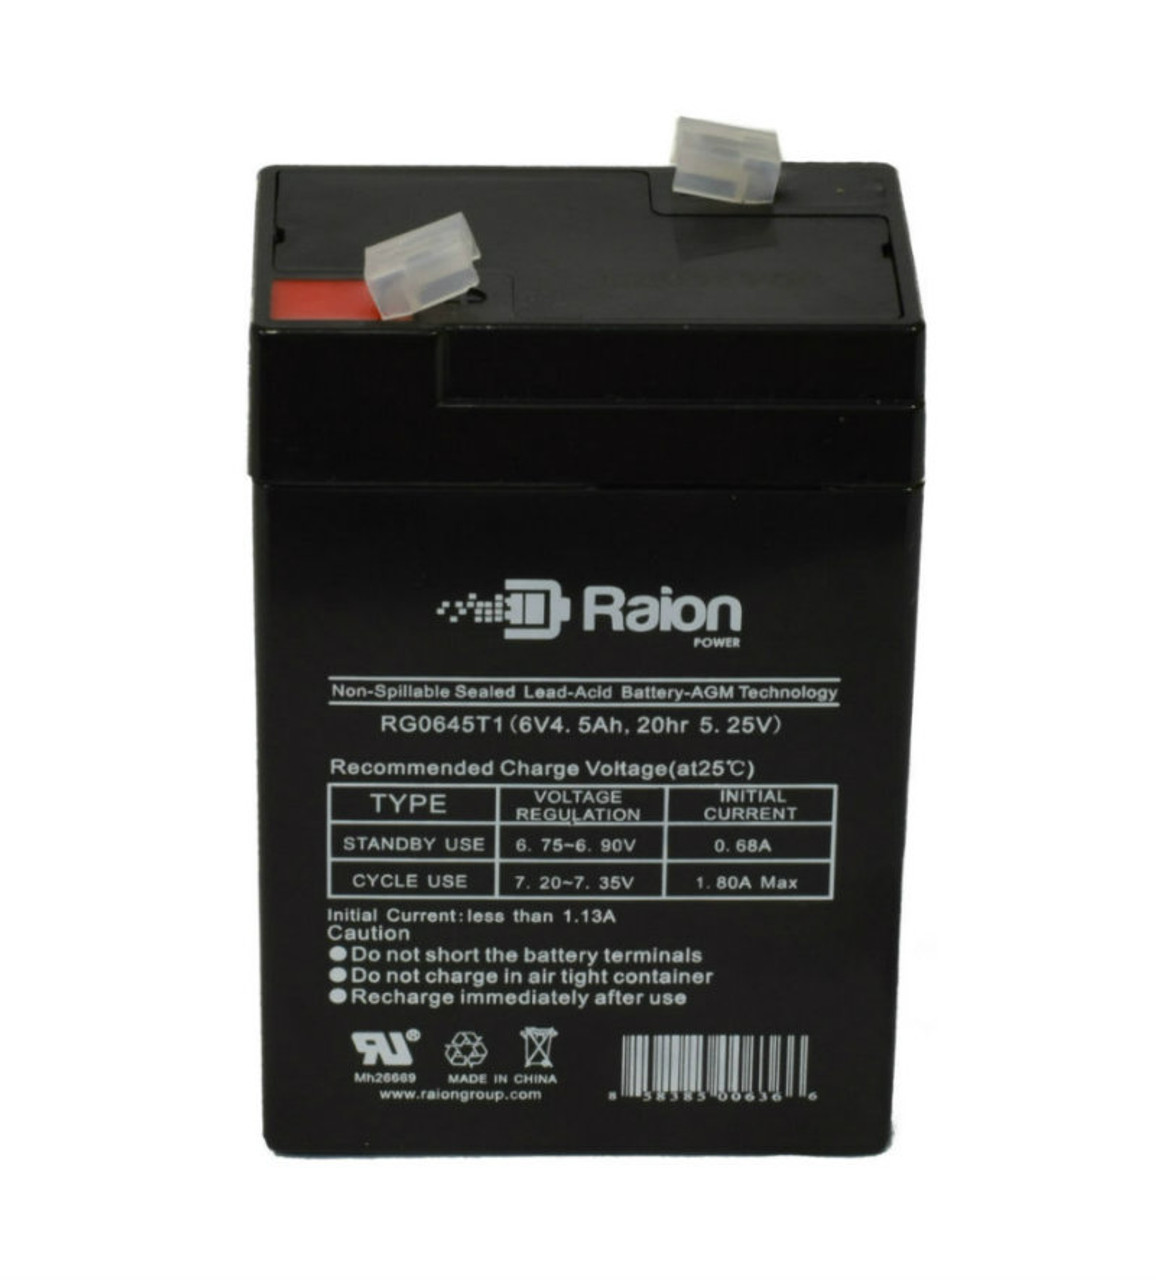 Raion Power RG0645T1 Replacement Battery Cartridge for Emergi-Lite M126